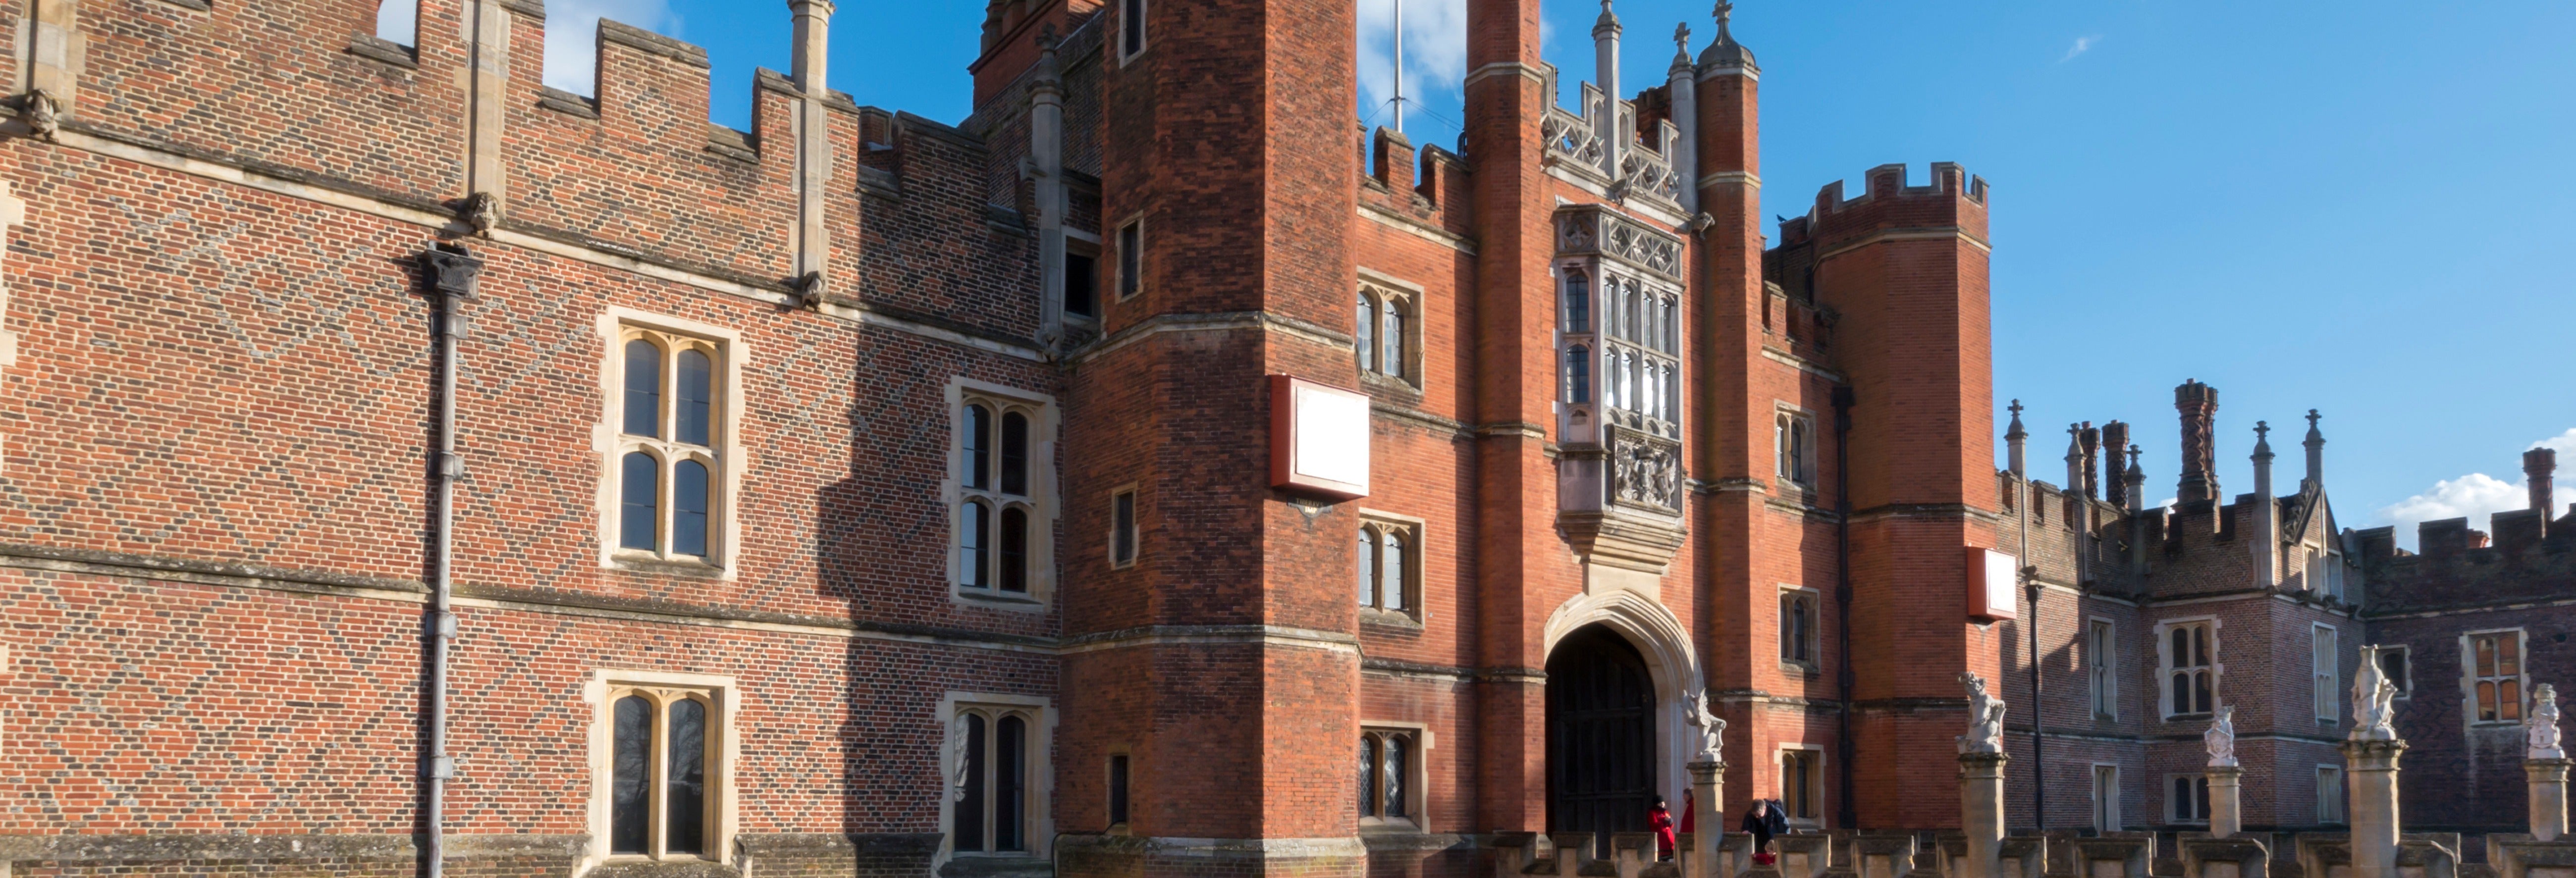 Hampton Court Palace Ticket